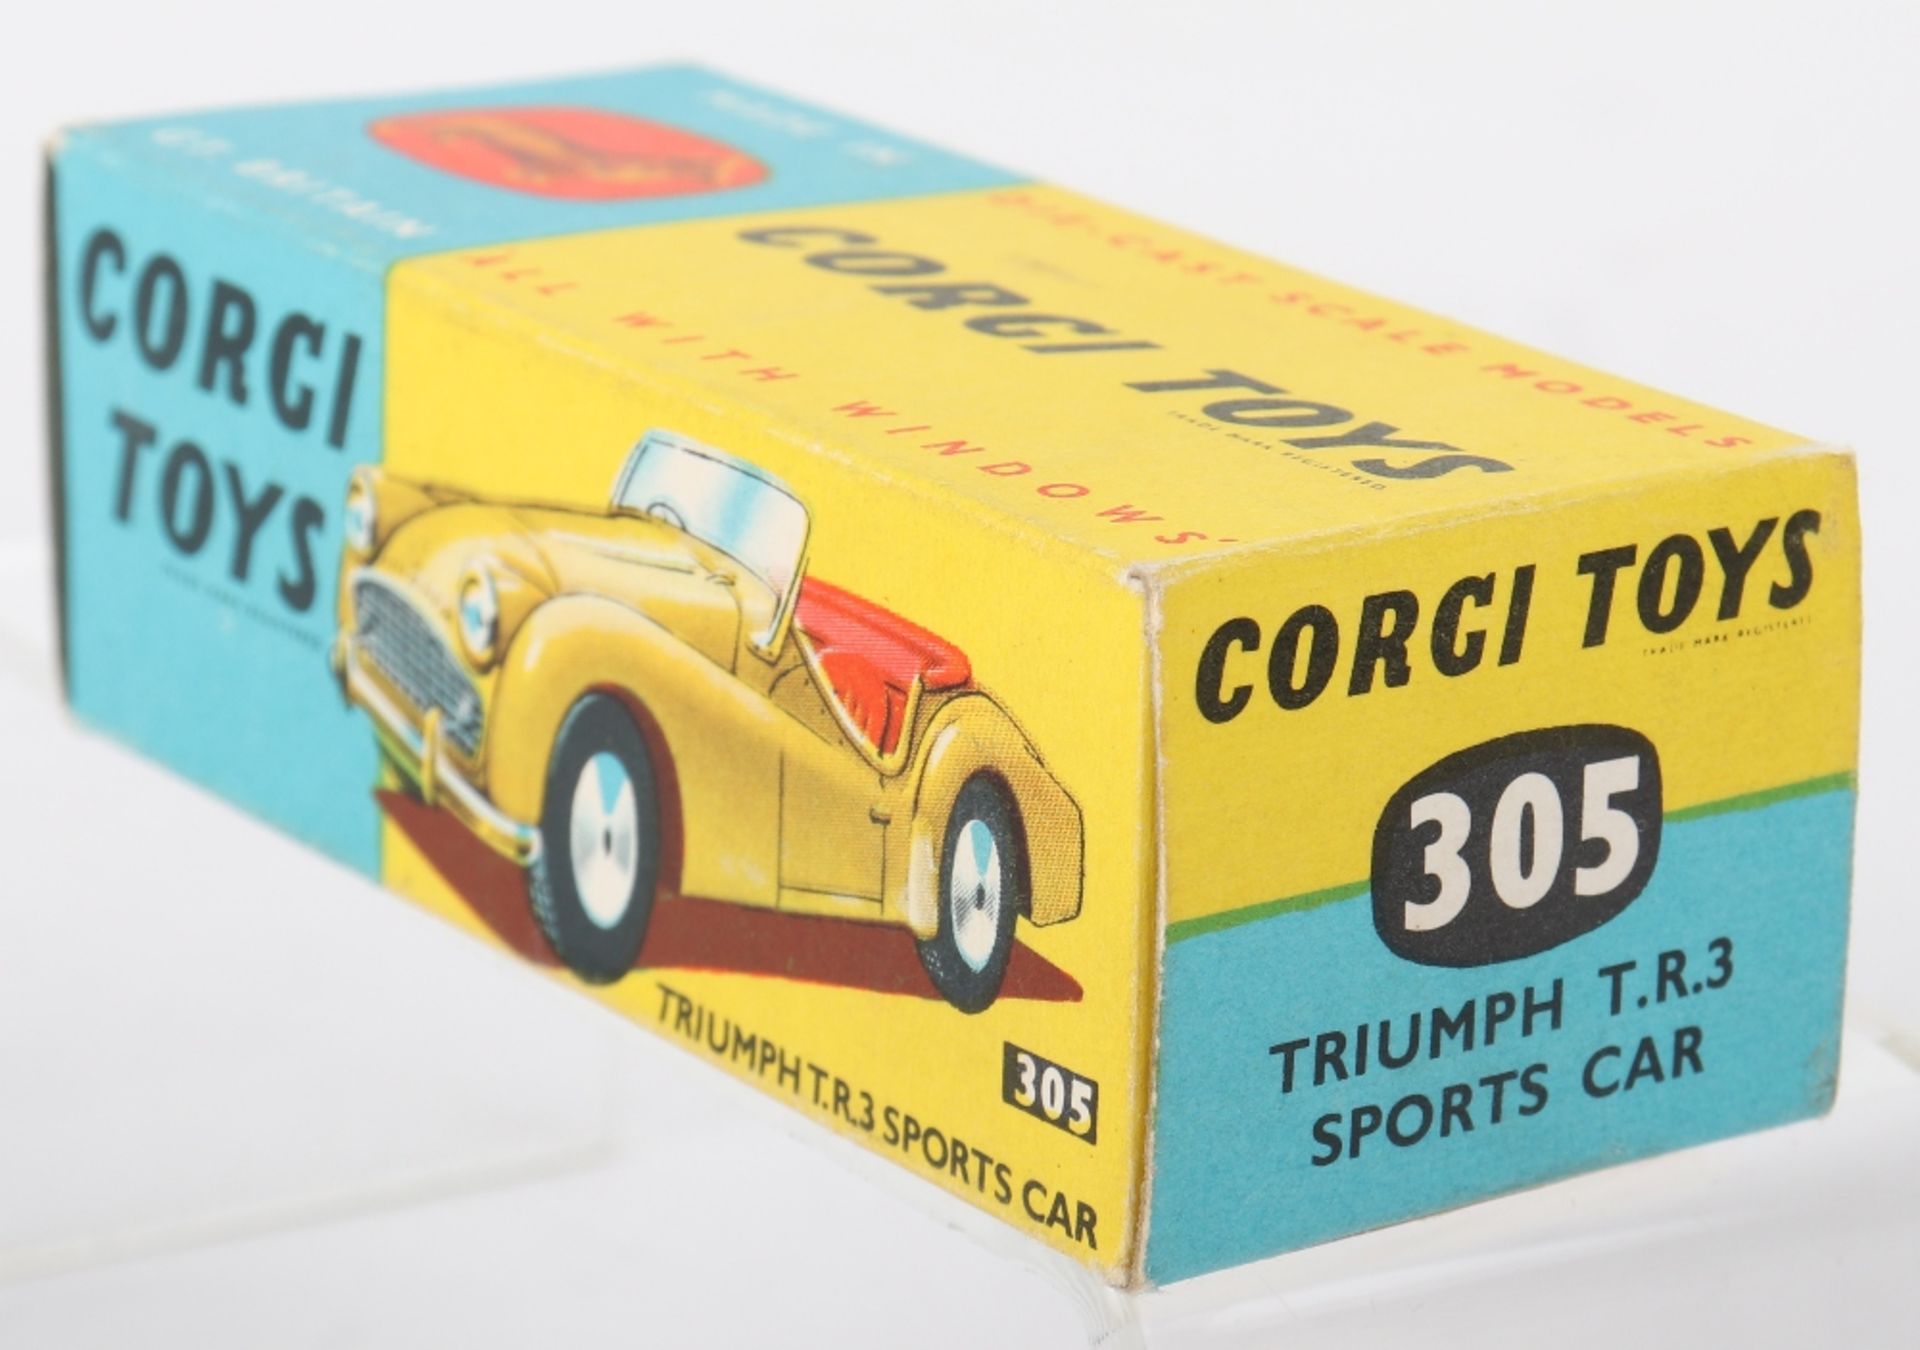 Corgi Toys 305 Triumph T.R.3 Sports Car - Image 4 of 5